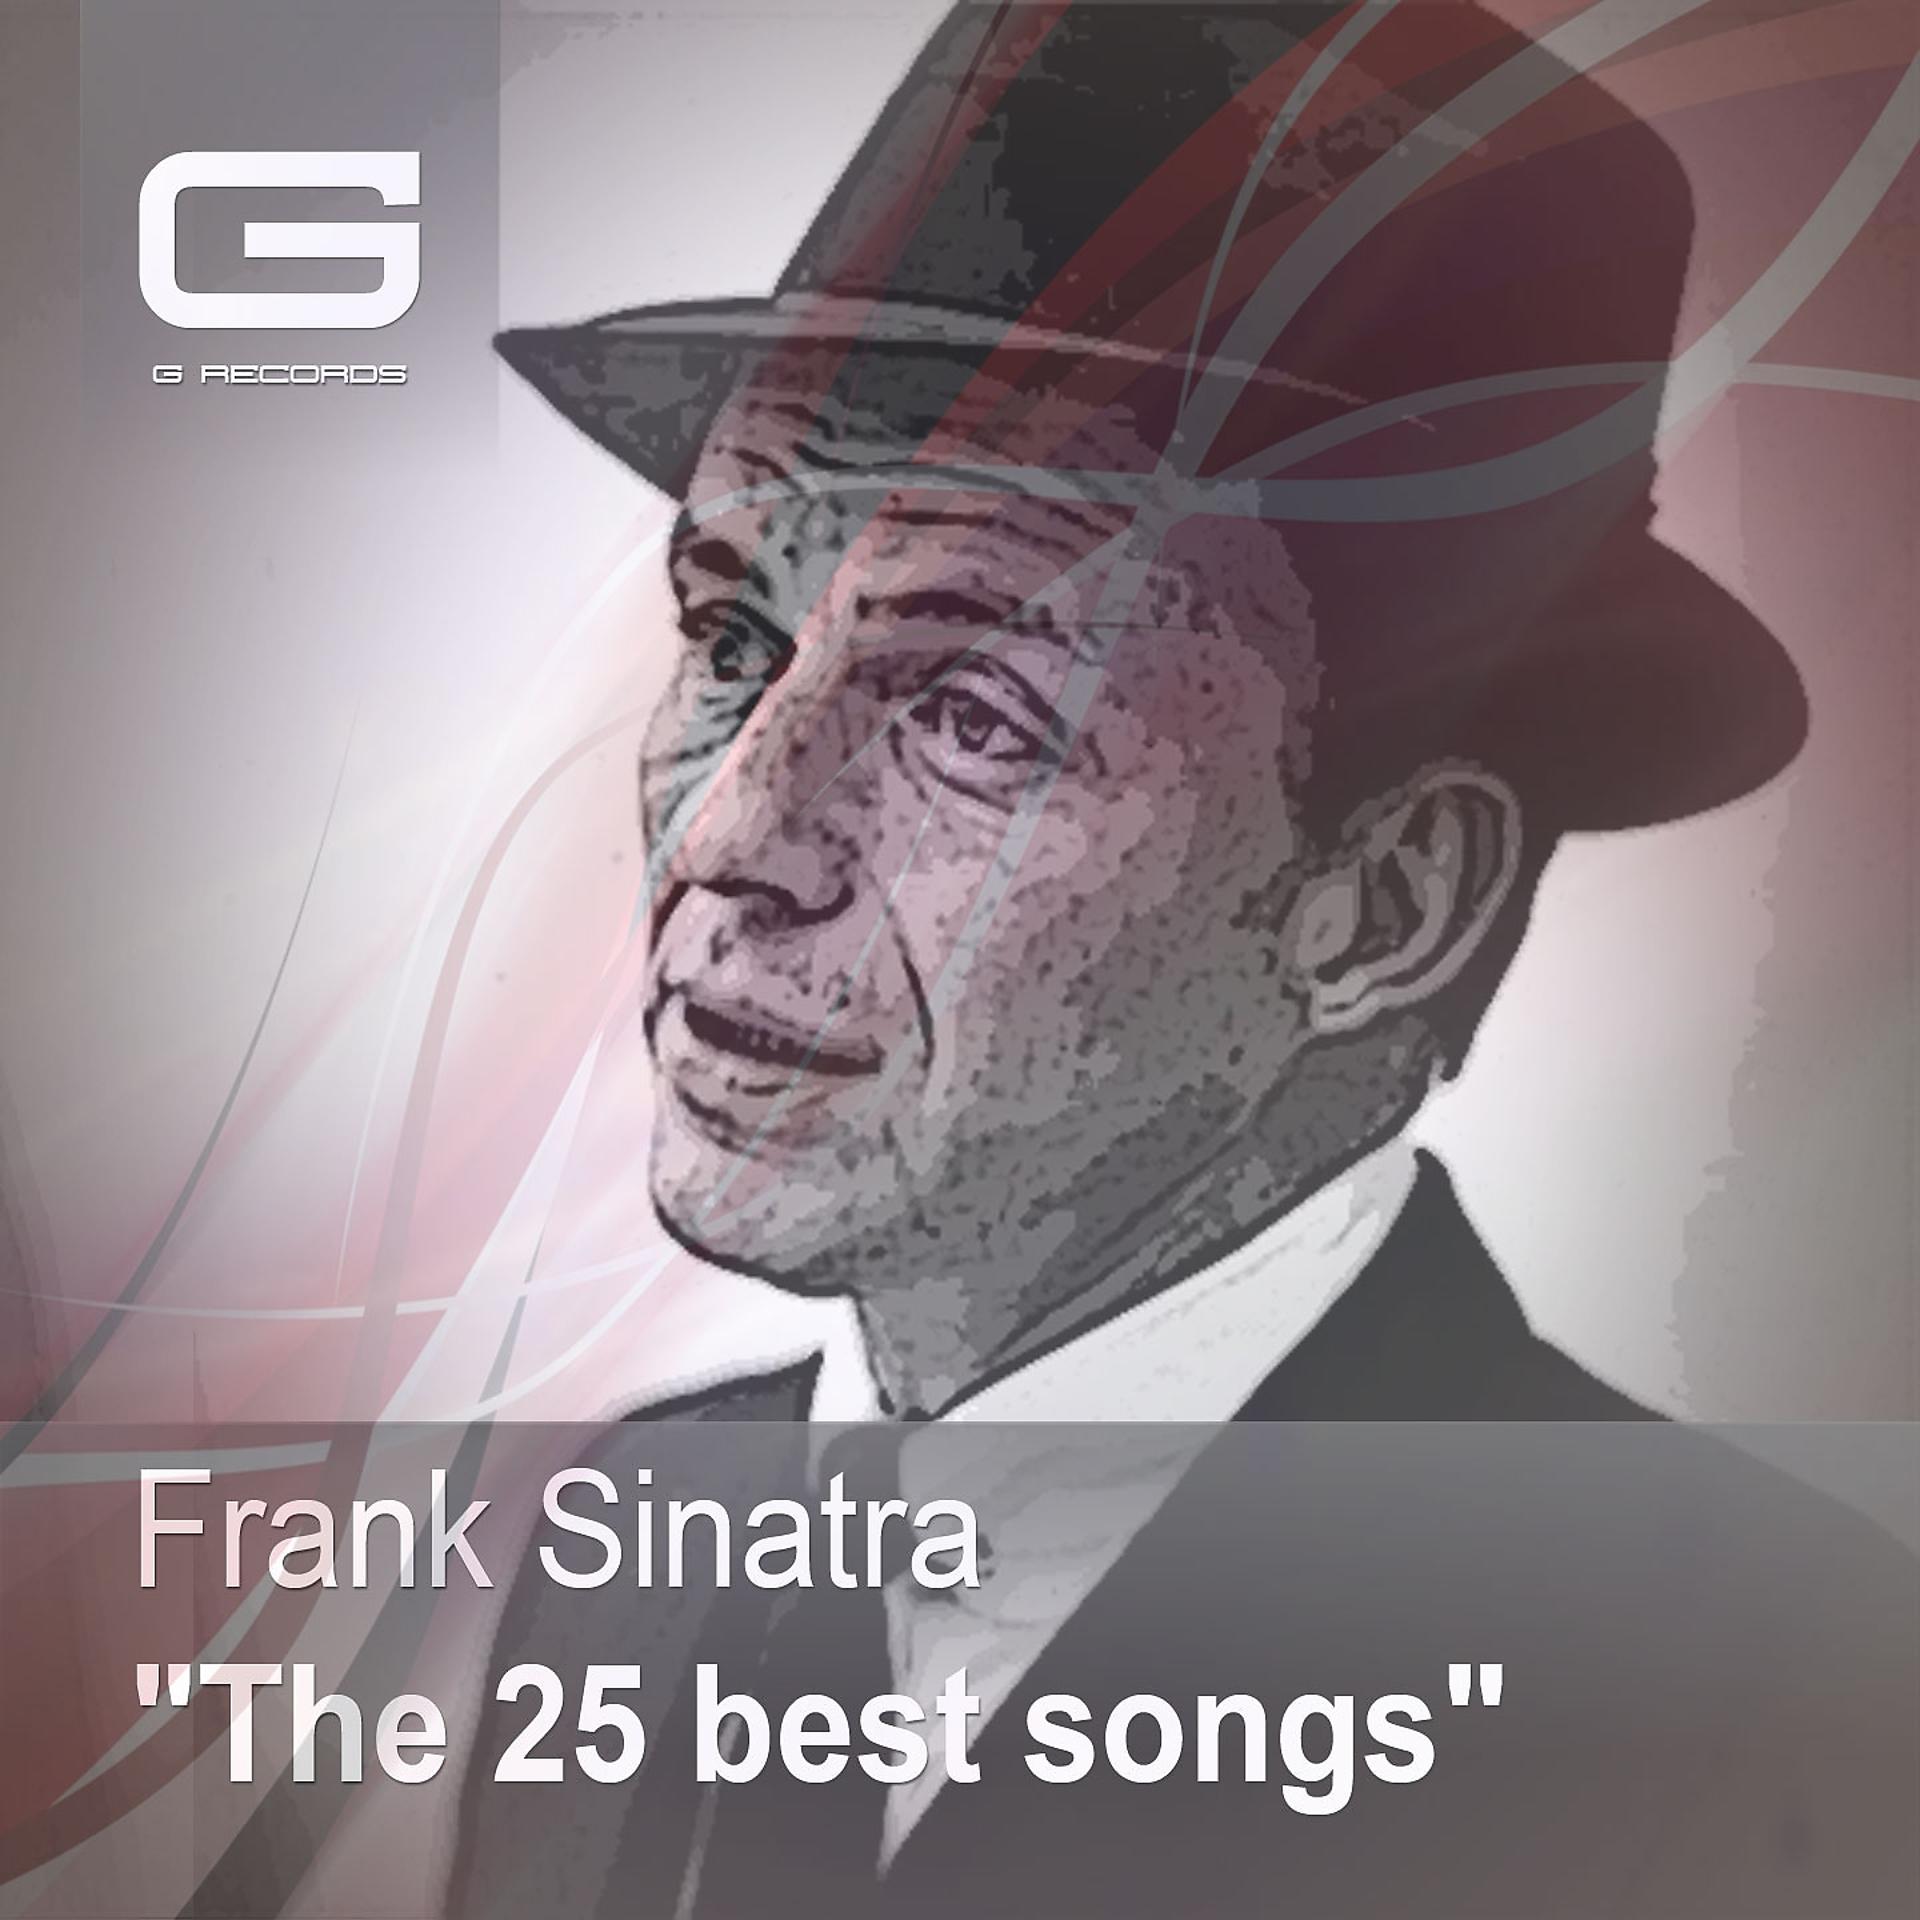 Фрэнк треки. Долли Синатра. Frank Sinatra Songs. Strangers in the Night Фрэнк Синатра. The best is yet to come Фрэнк Синатра.